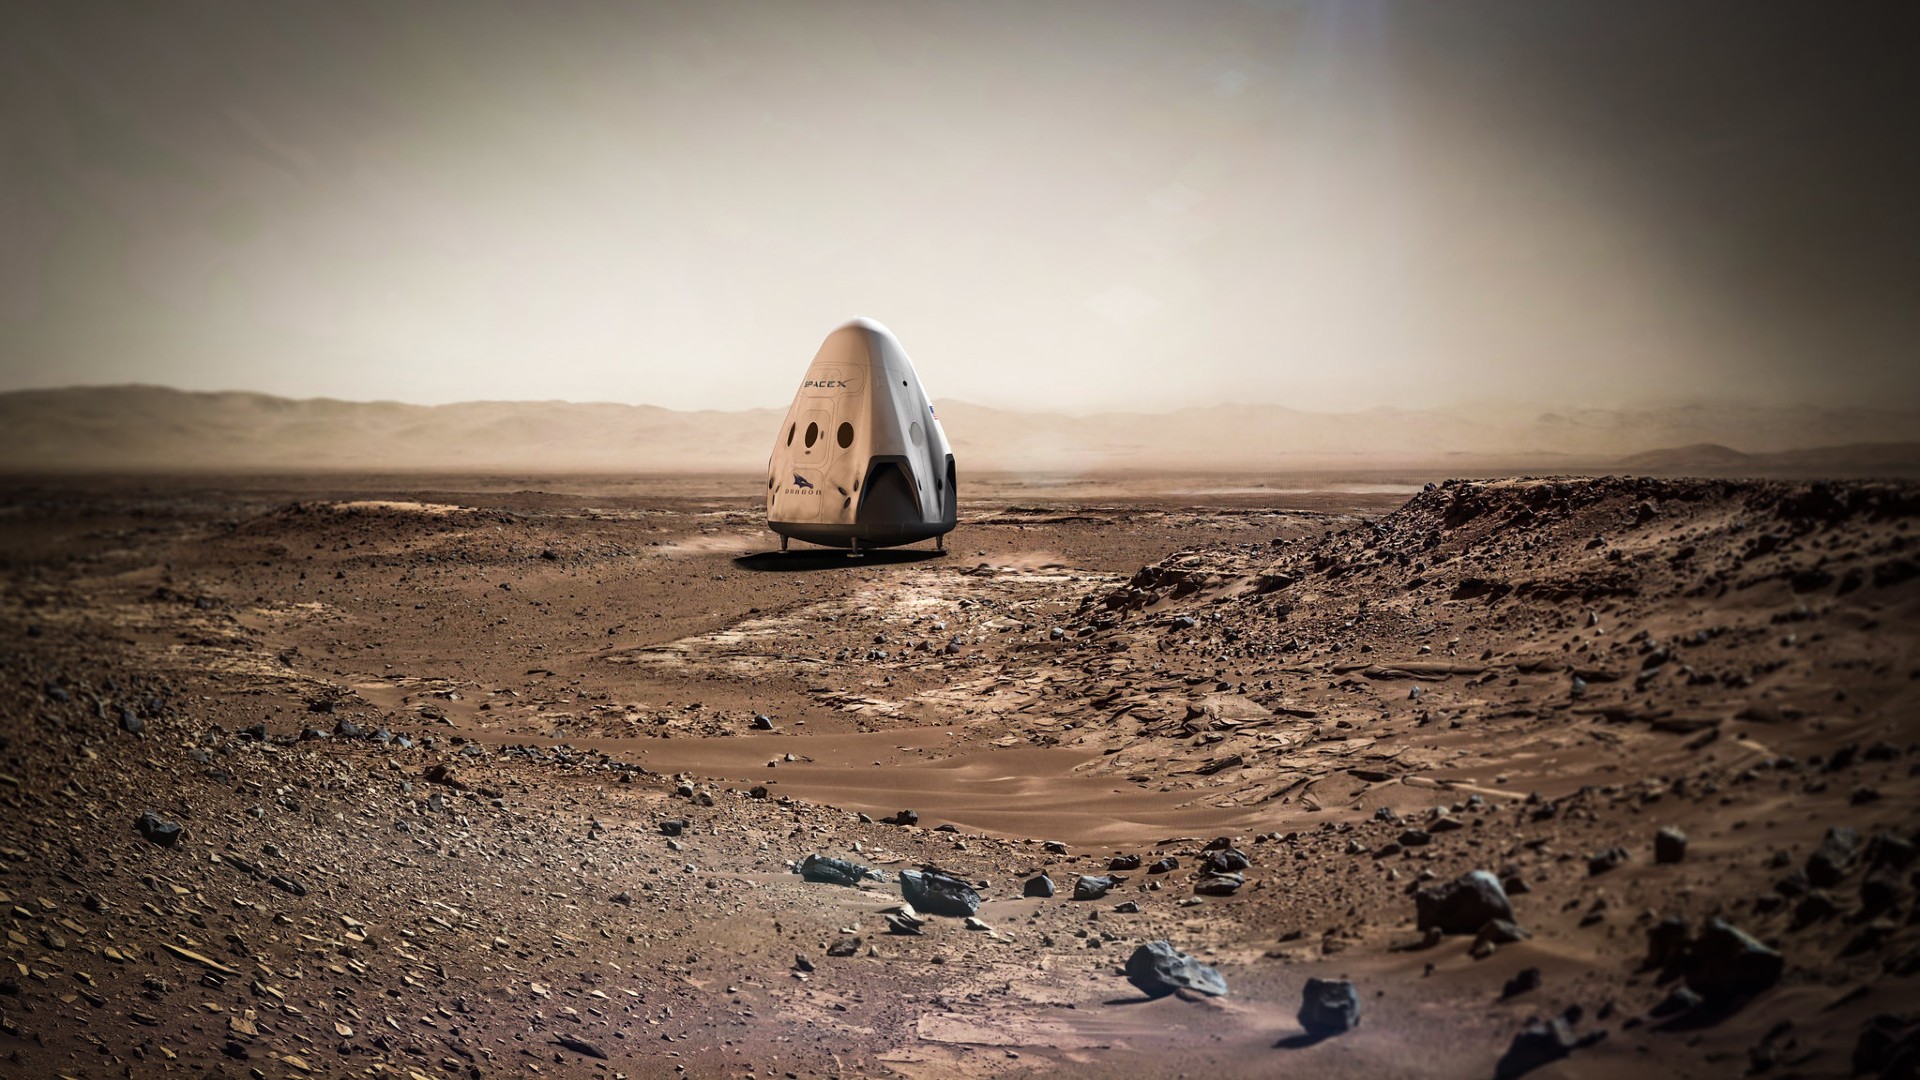 Illustration of SpaceX's Dragon capsule landing on Mars.